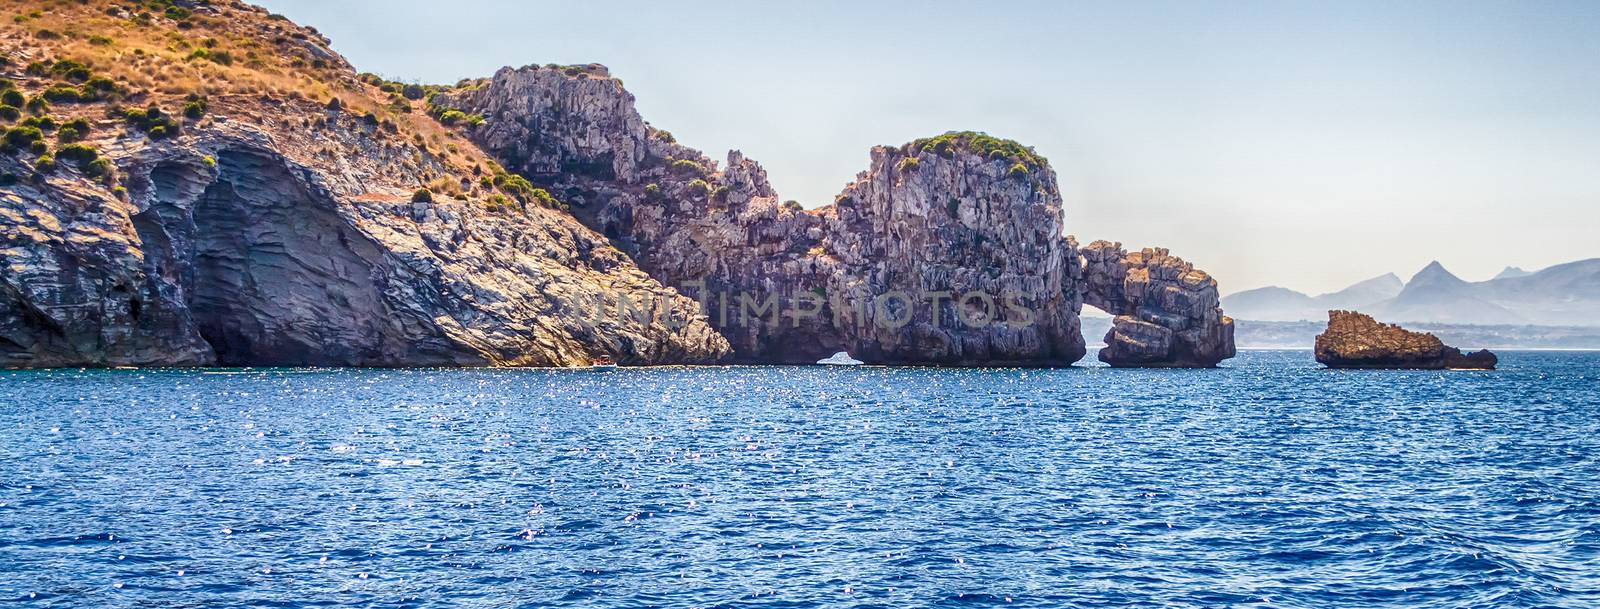 Wild beautiful coastline at the Zingaro Natural Reserve, Sicily, by marcorubino